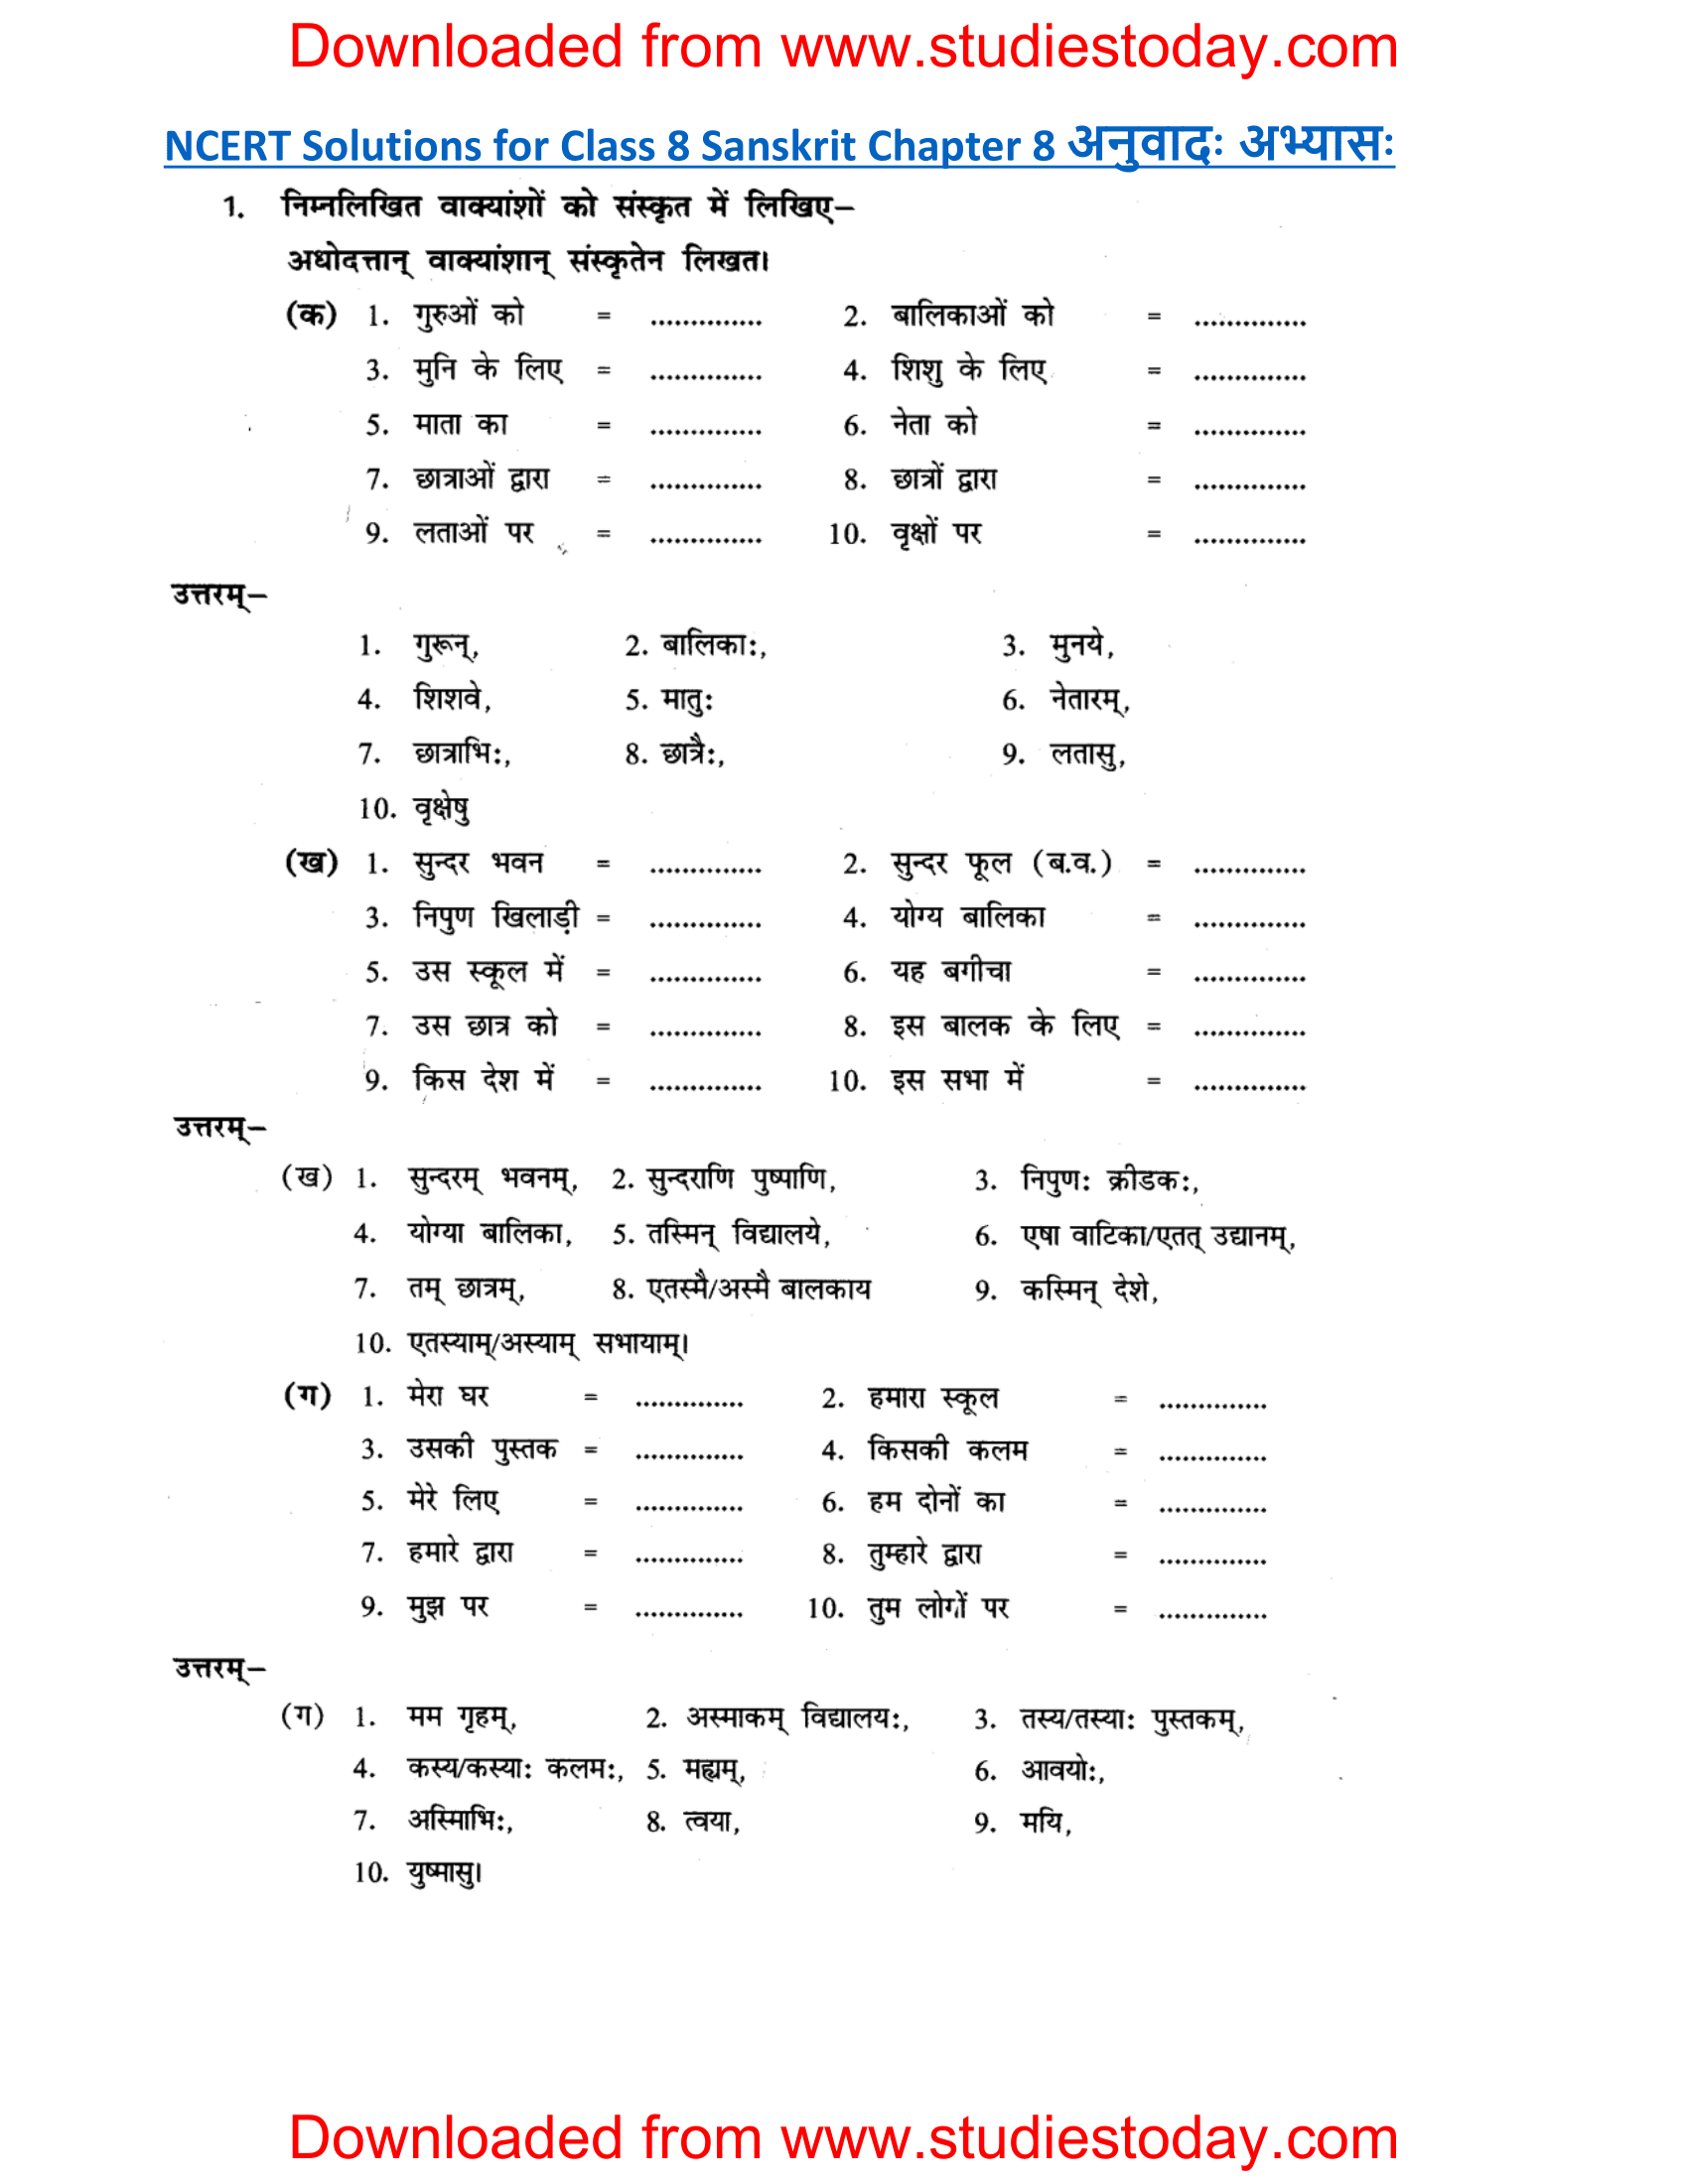 ncert-solutions-class-8-sanskrit-chapter-8-anuvad-abhyas-1